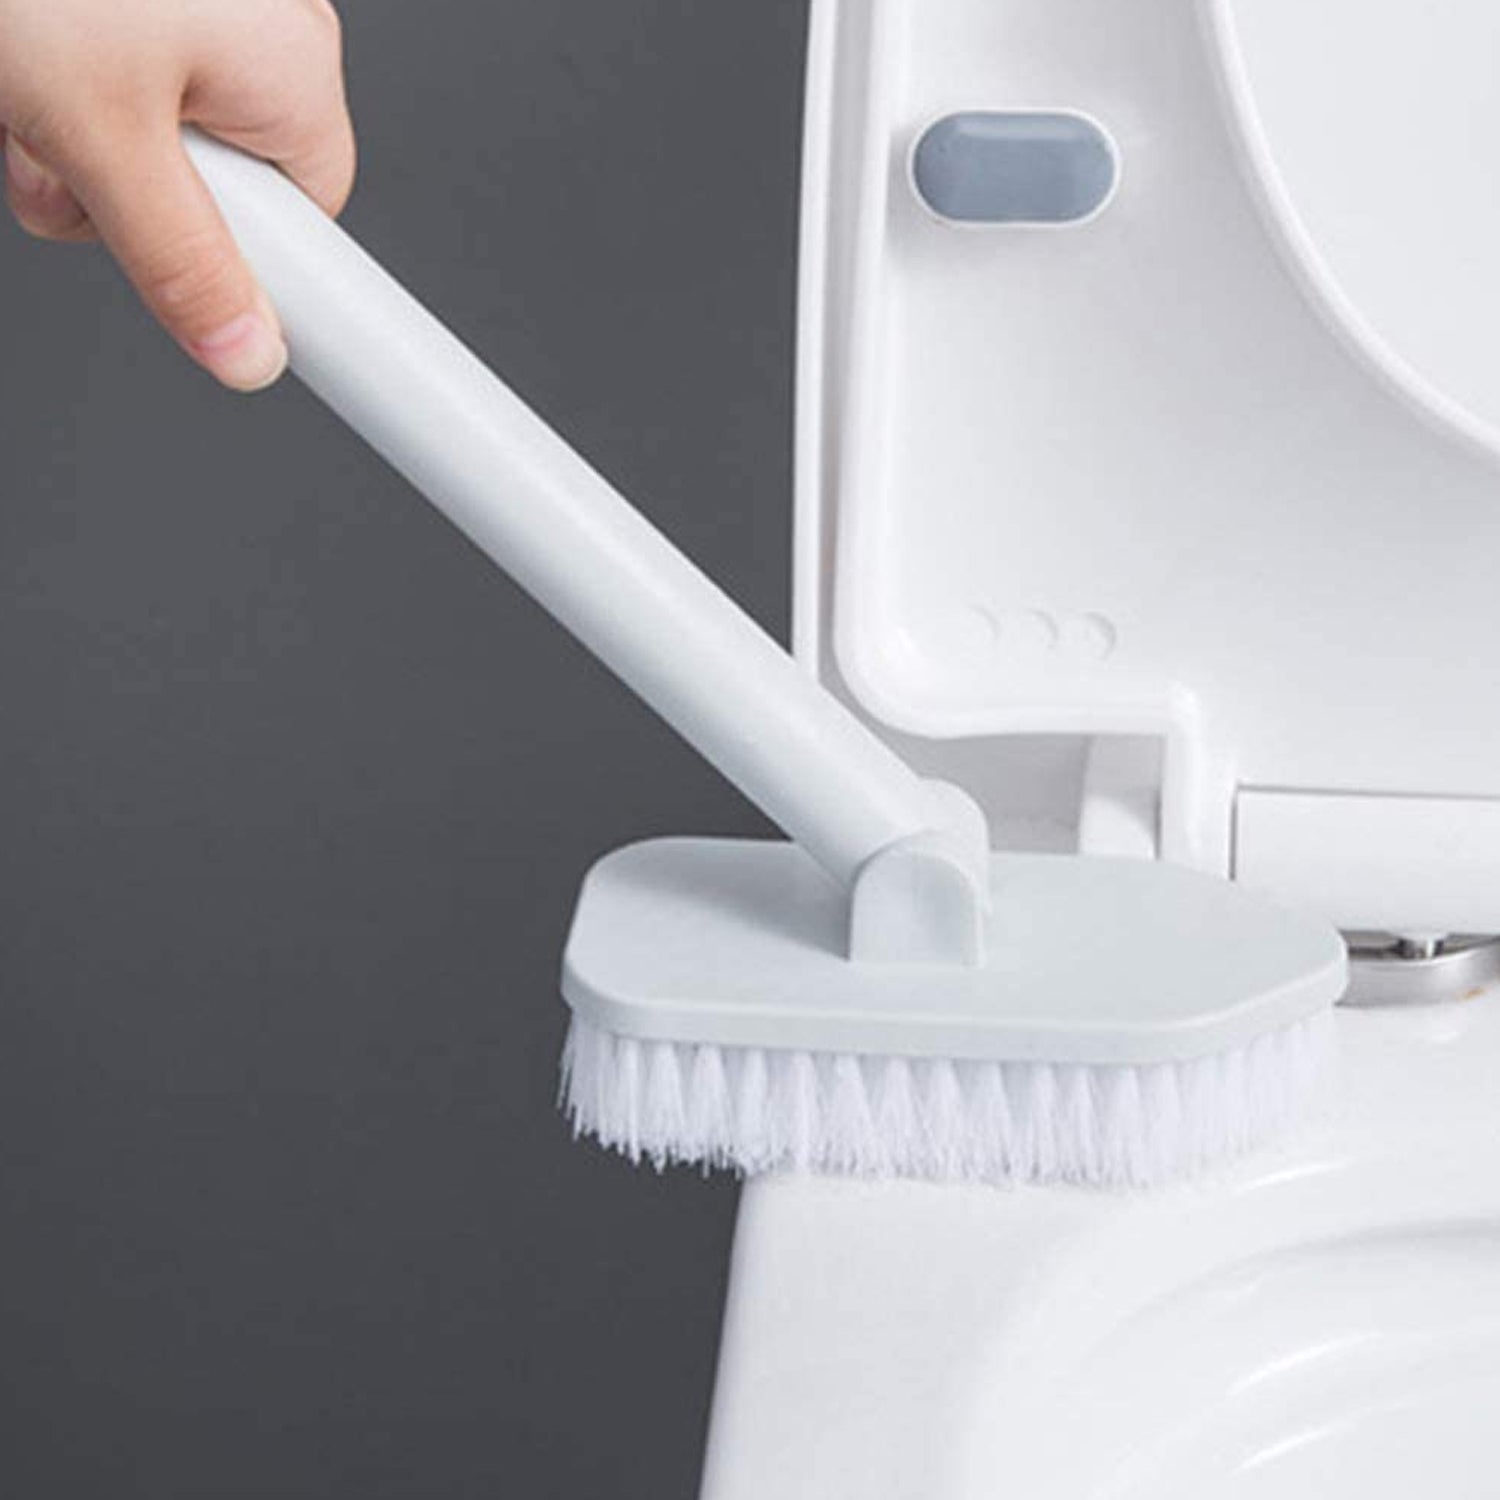 4075 Cleaning Brush 3in1 Multi Functional Brush Cleaning ,Scrubbing & Duster Brush For Home & Multiuse Brush DeoDap